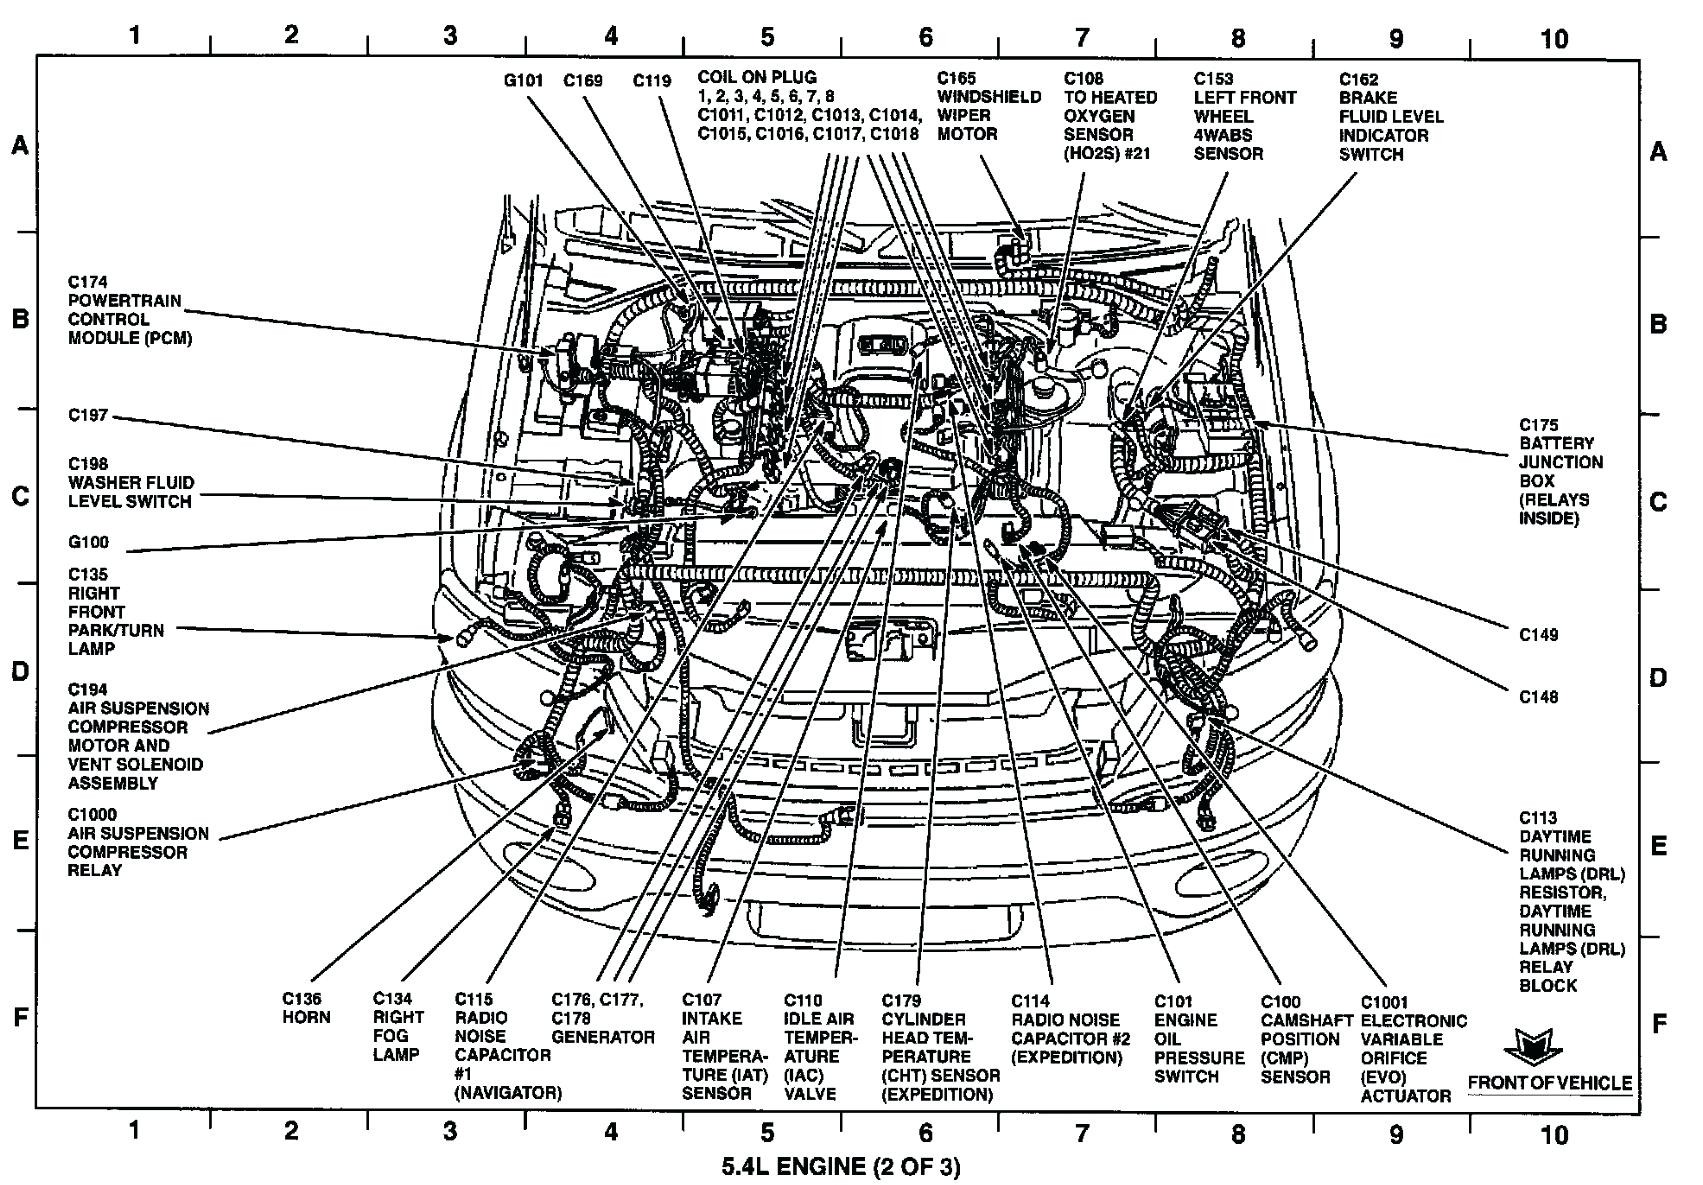 7 3 Diesel Engine Diagram 2 ford V6 3 7 Engine Diagram Of 7 3 Diesel Engine Diagram 2